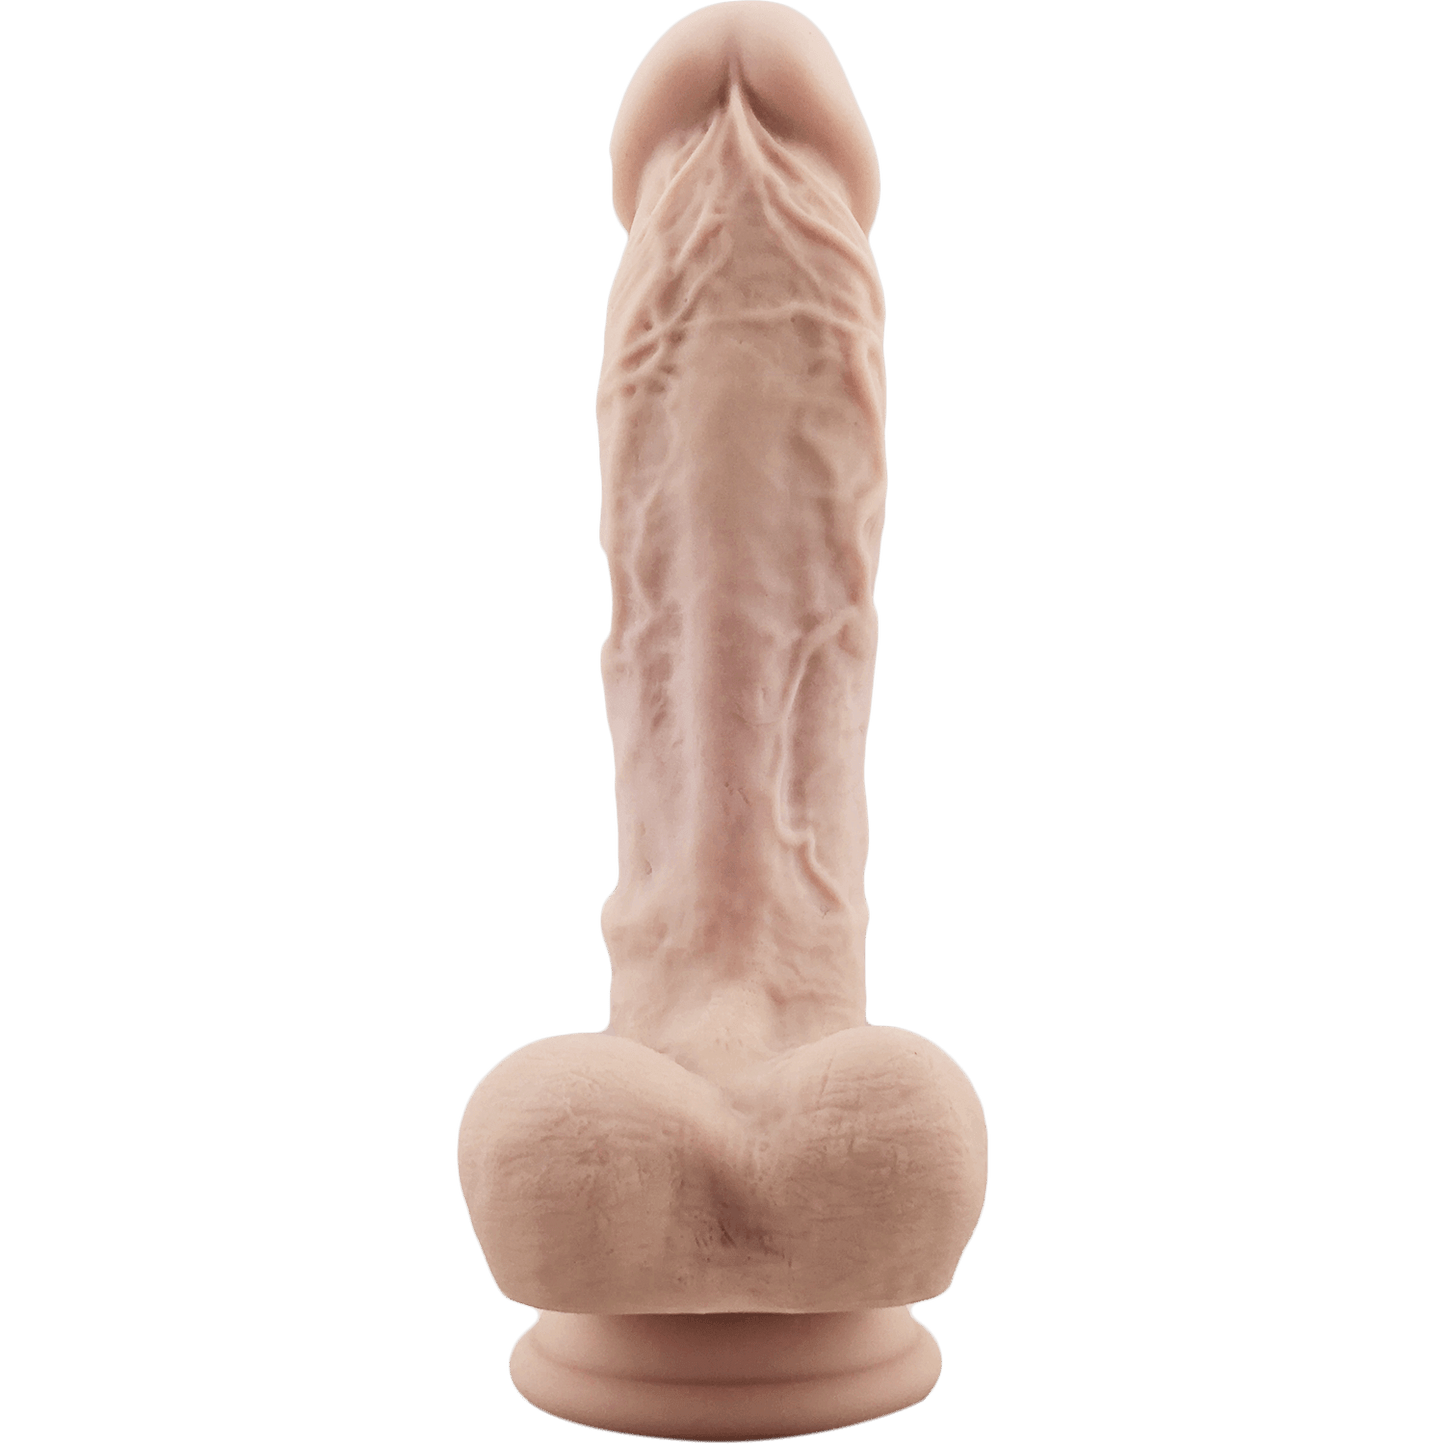 T&F 8" Roman Emperor Dildo - Thorn & Feather Sex Toy Canada